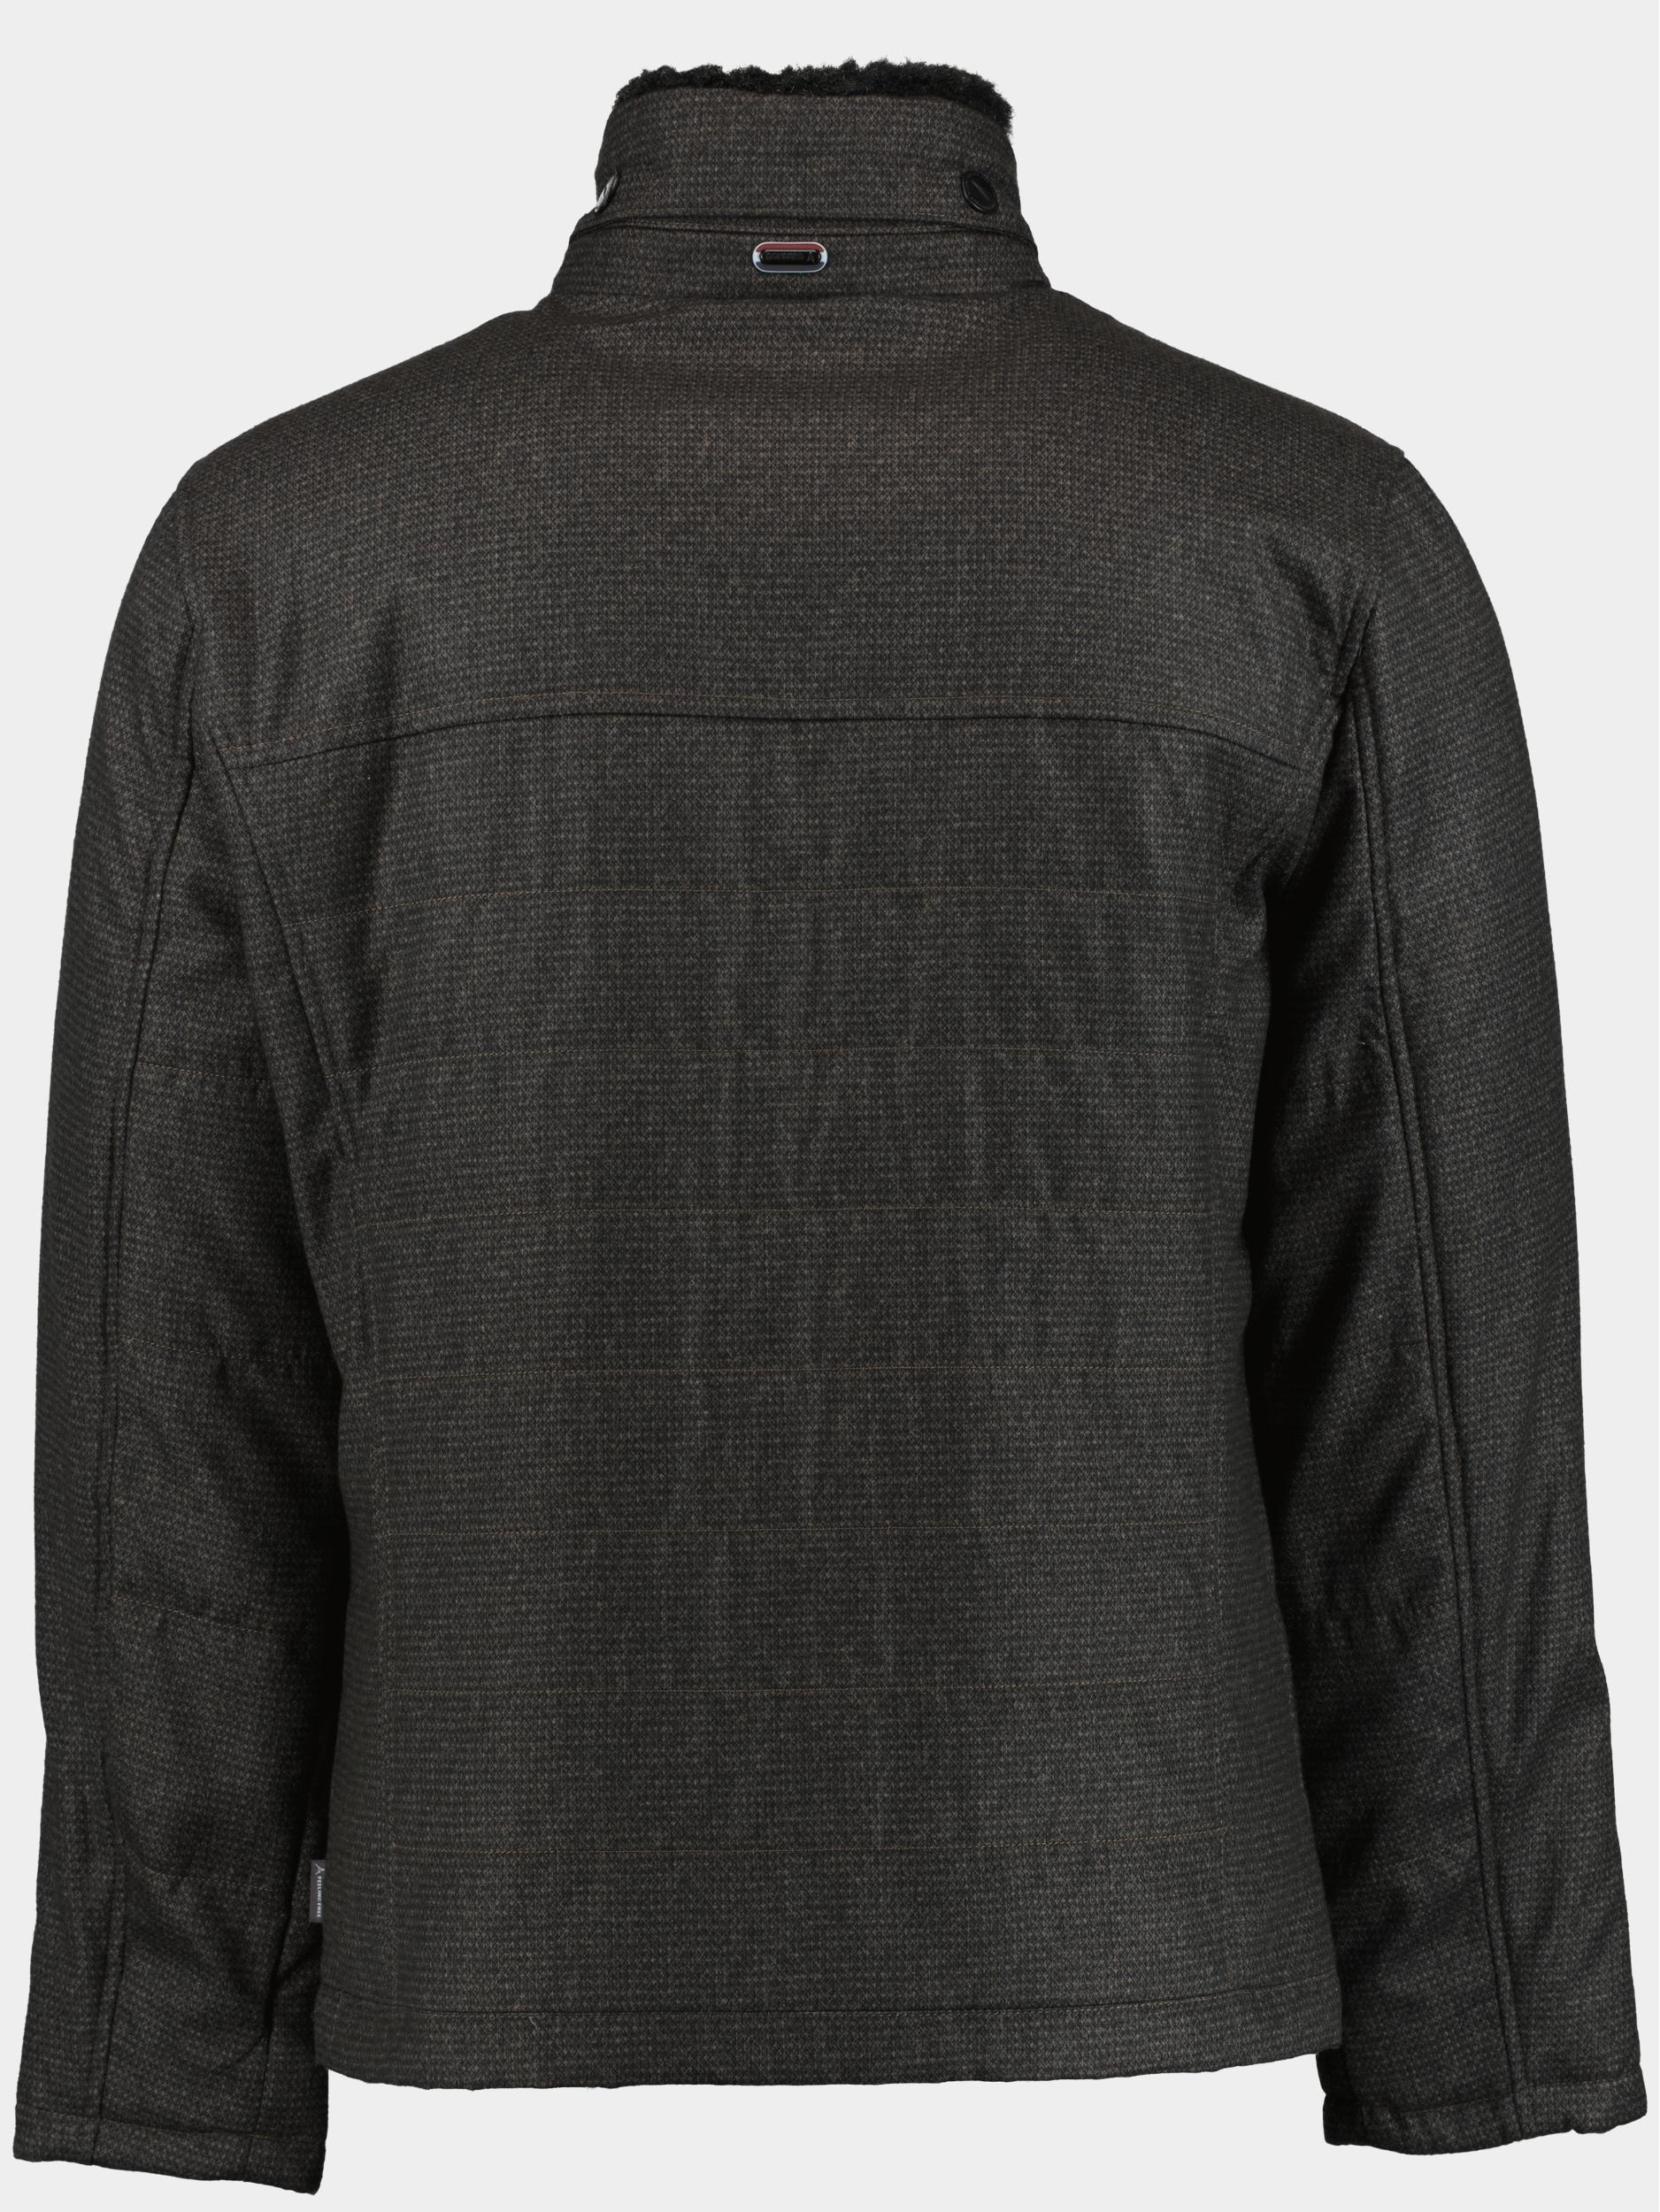 Donders 1860 Winterjack Zwart Textile Jacket 21732/590